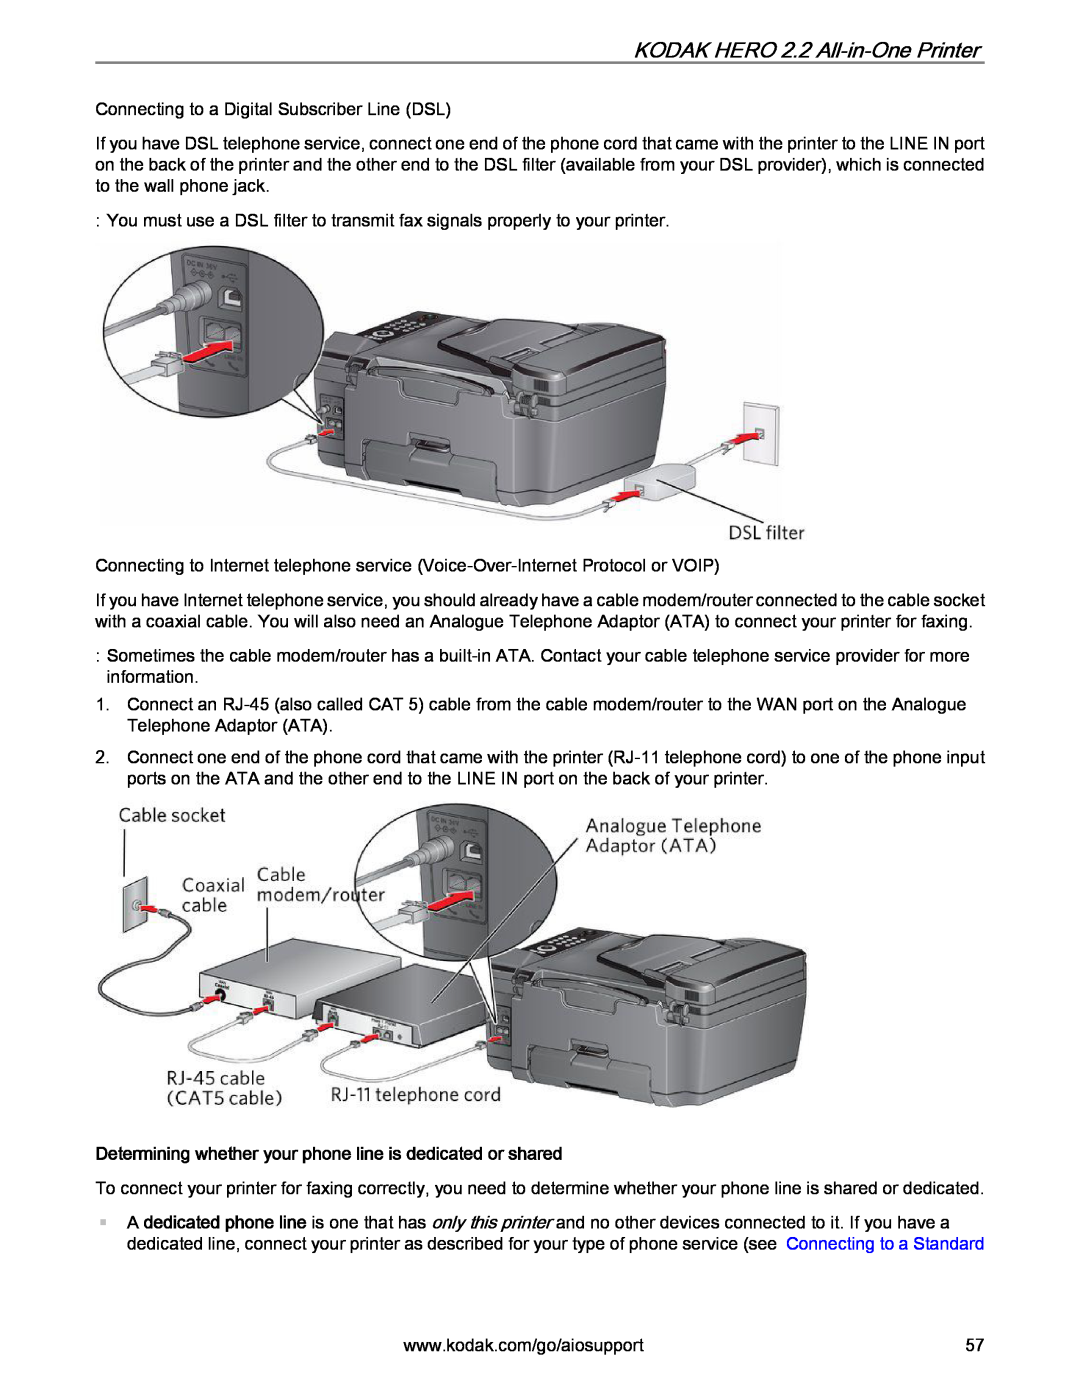 Kodak manual Determining whether your phone line is dedicated or shared, KODAK HERO 2.2 All-in-One Printer 